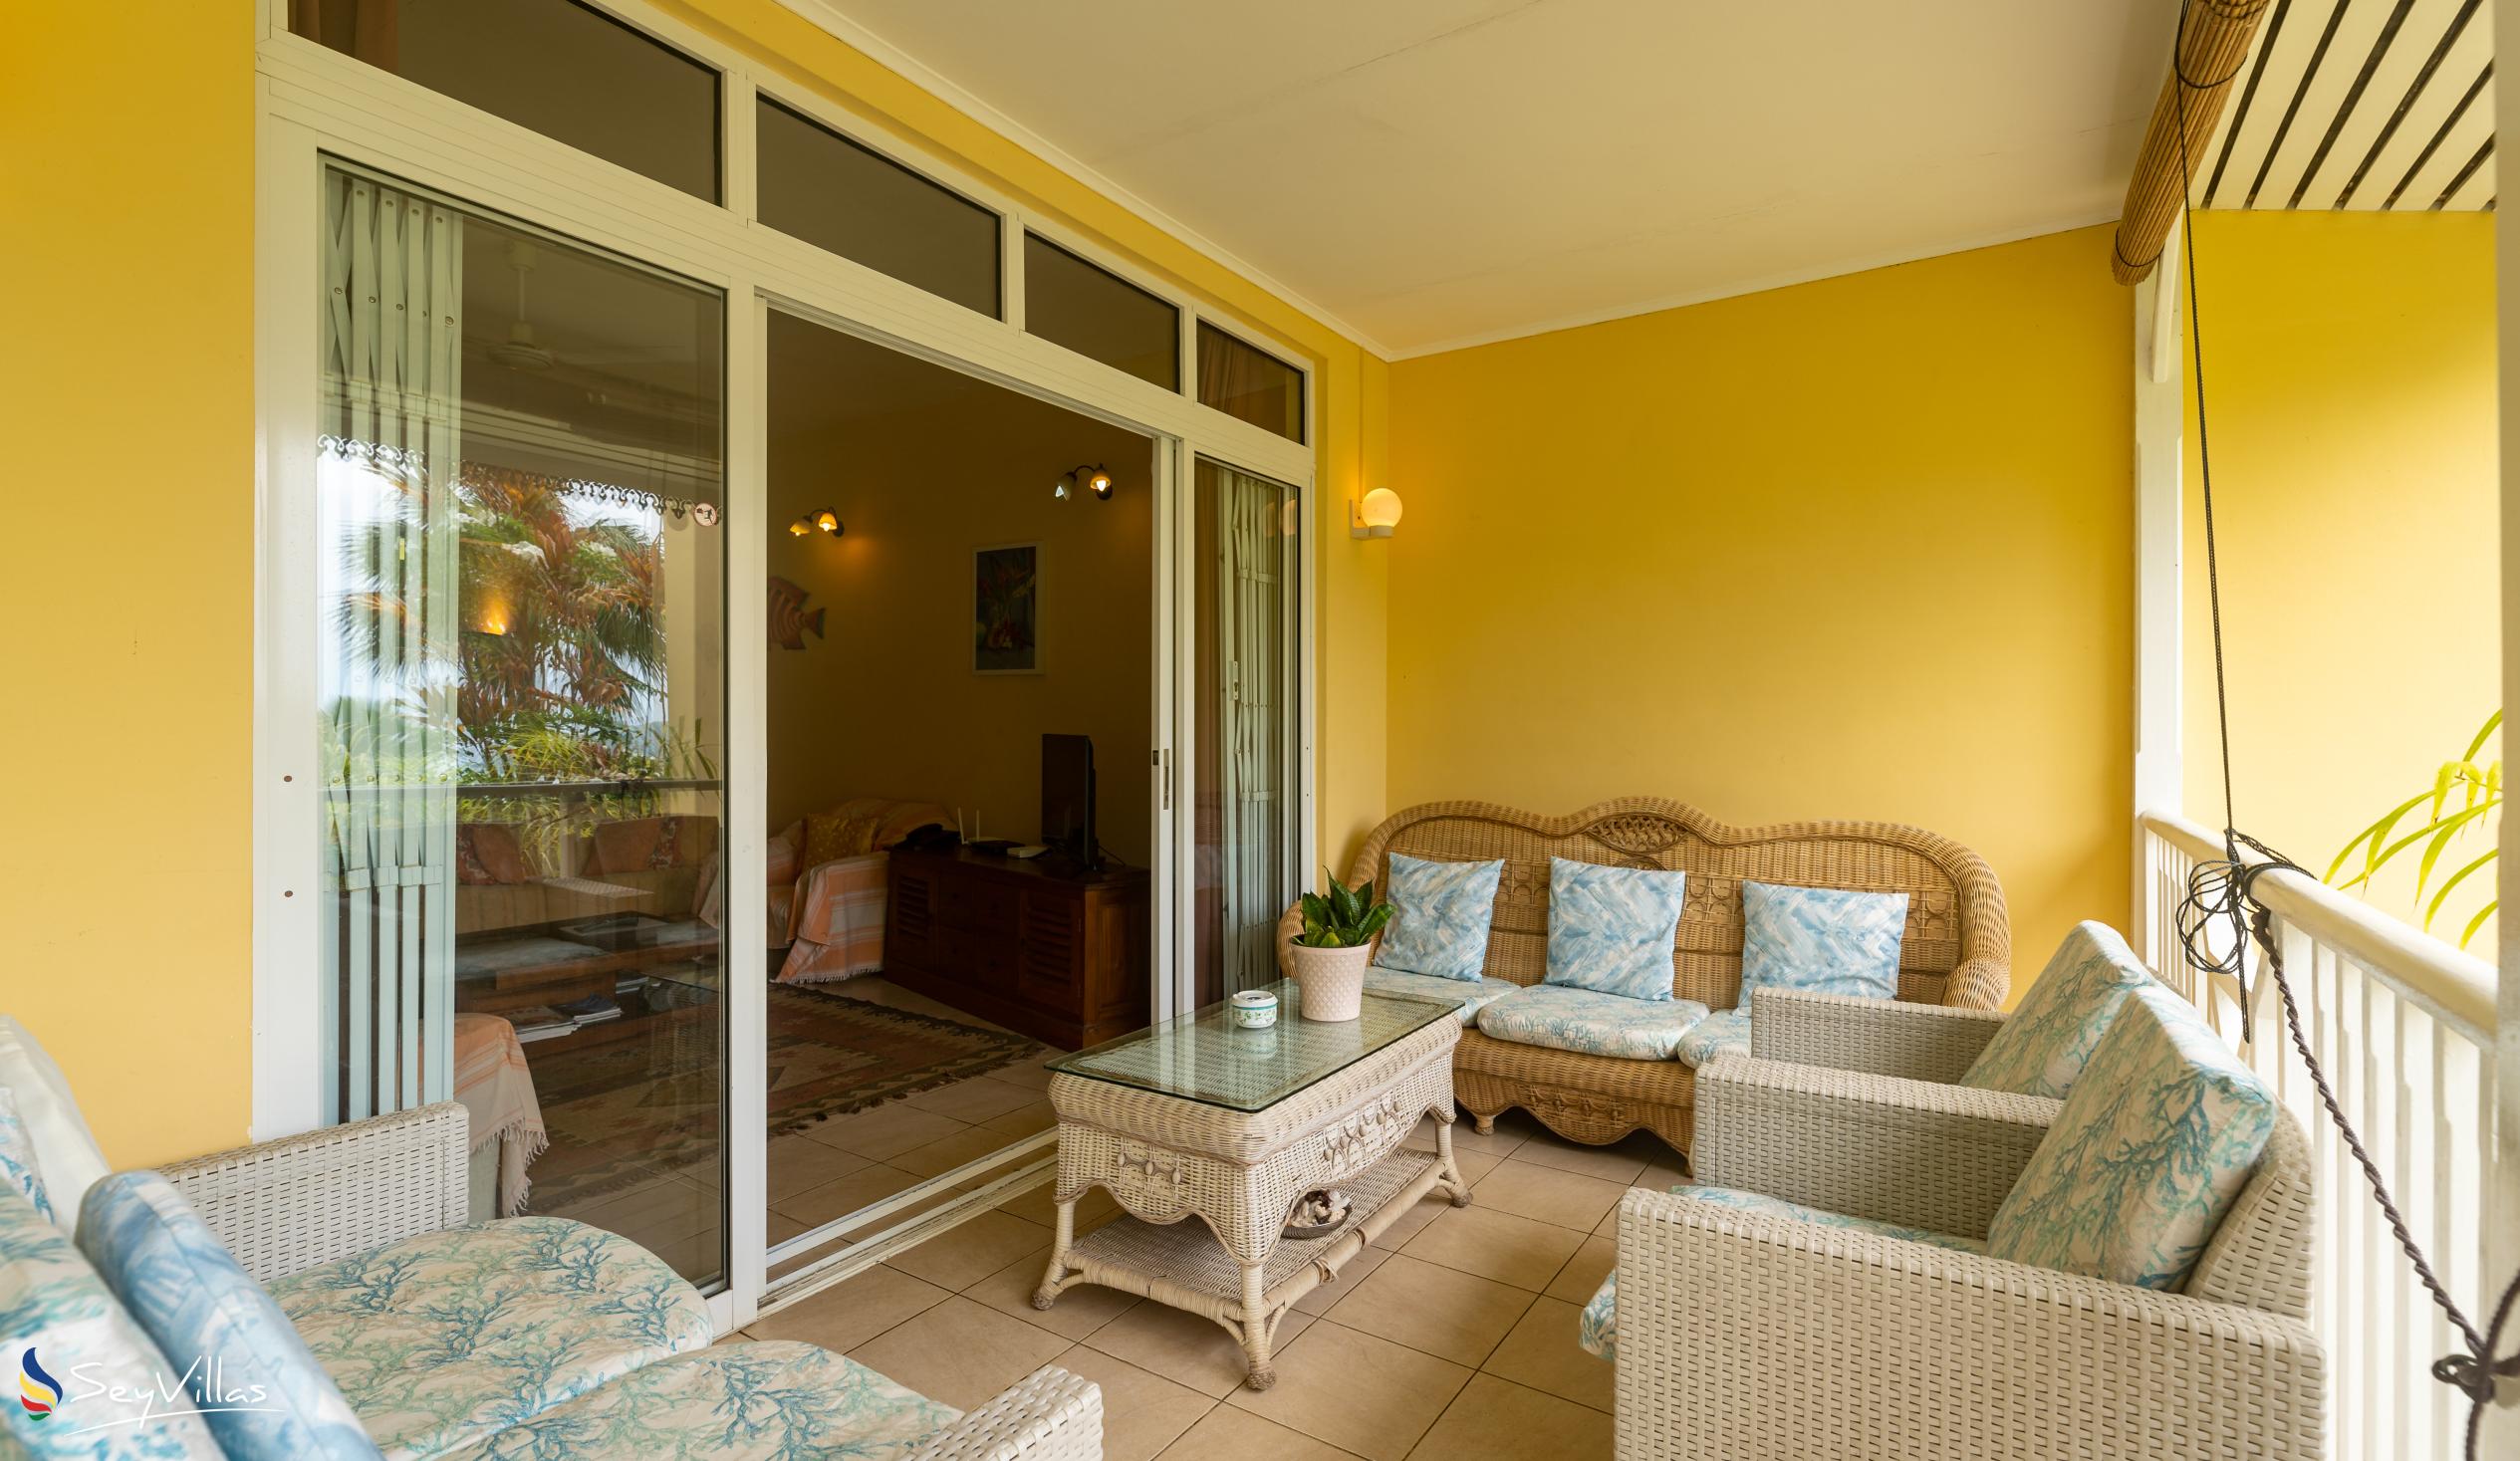 Photo 86: Residence Monte Cristo - 3-Bedroom Duplex - Mahé (Seychelles)